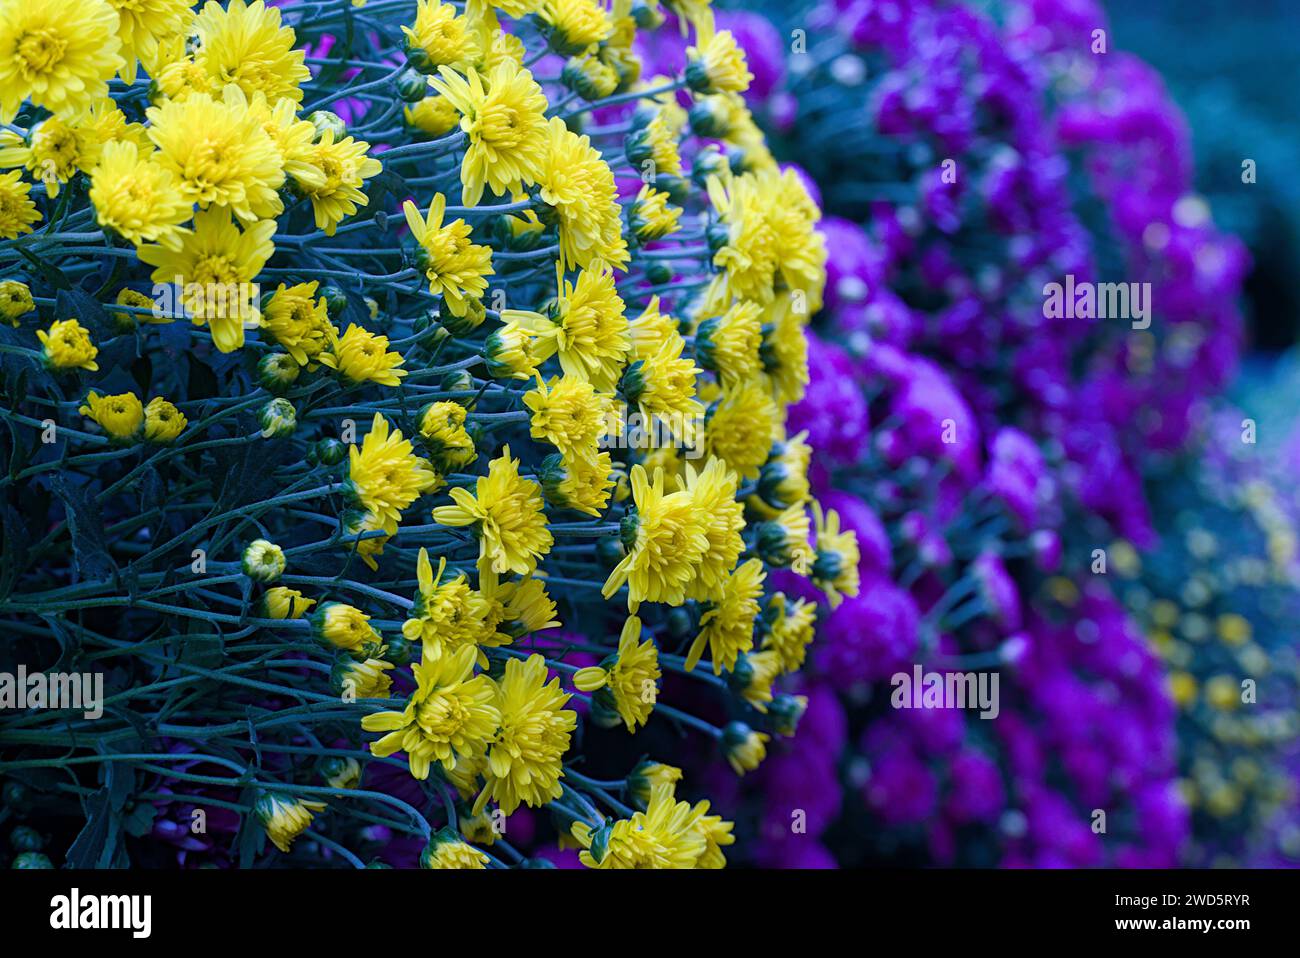 Ursula Sunny Yellow Chrysanthemum with purple Chrysanthemum in the background. Stock Photo